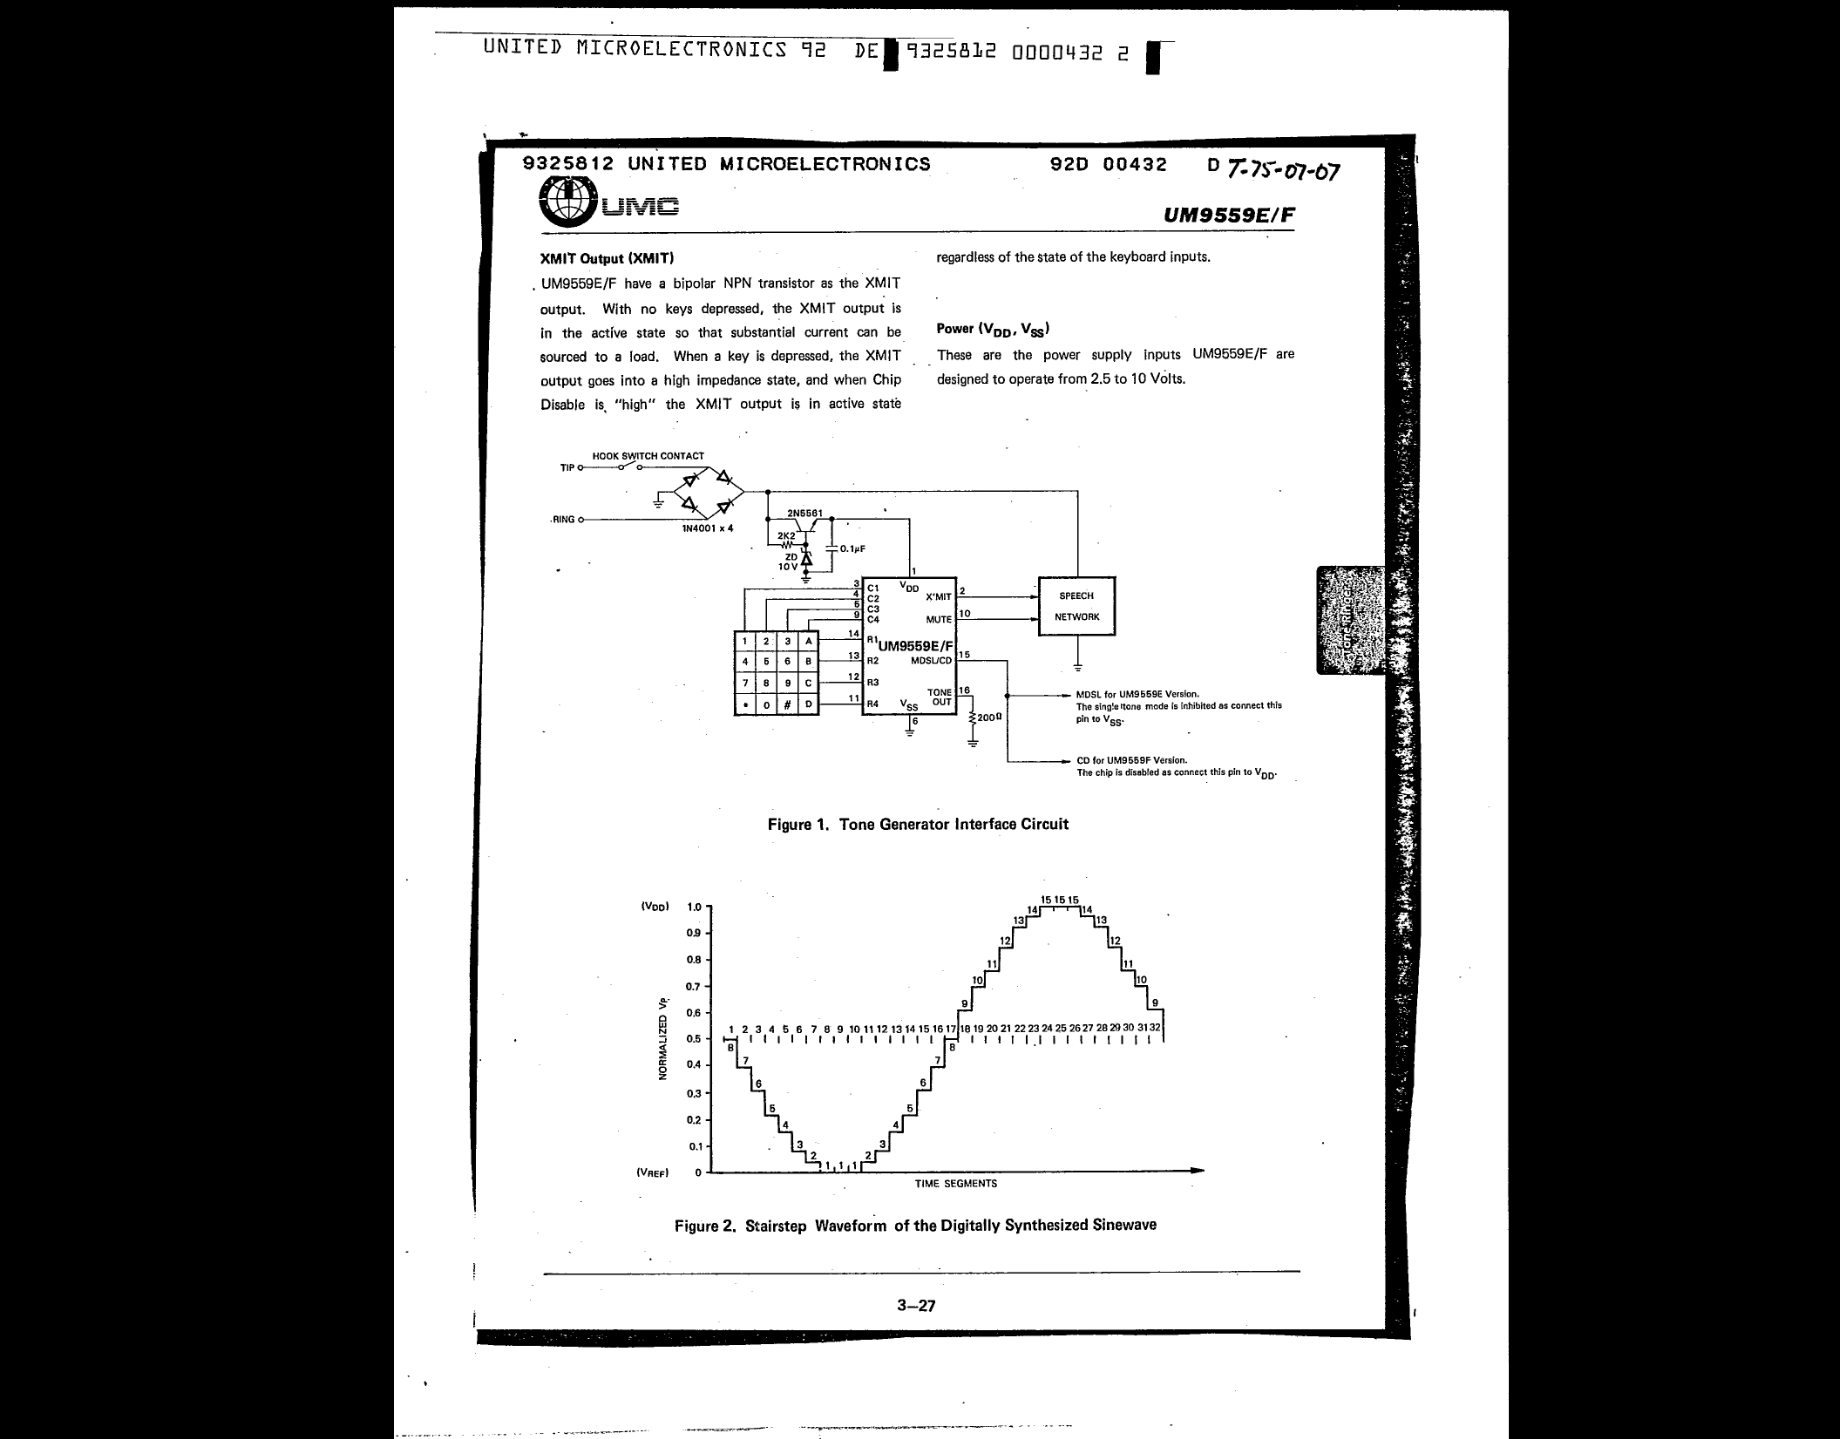 UM9559E Datasheet, page 3, describing the tone generator function